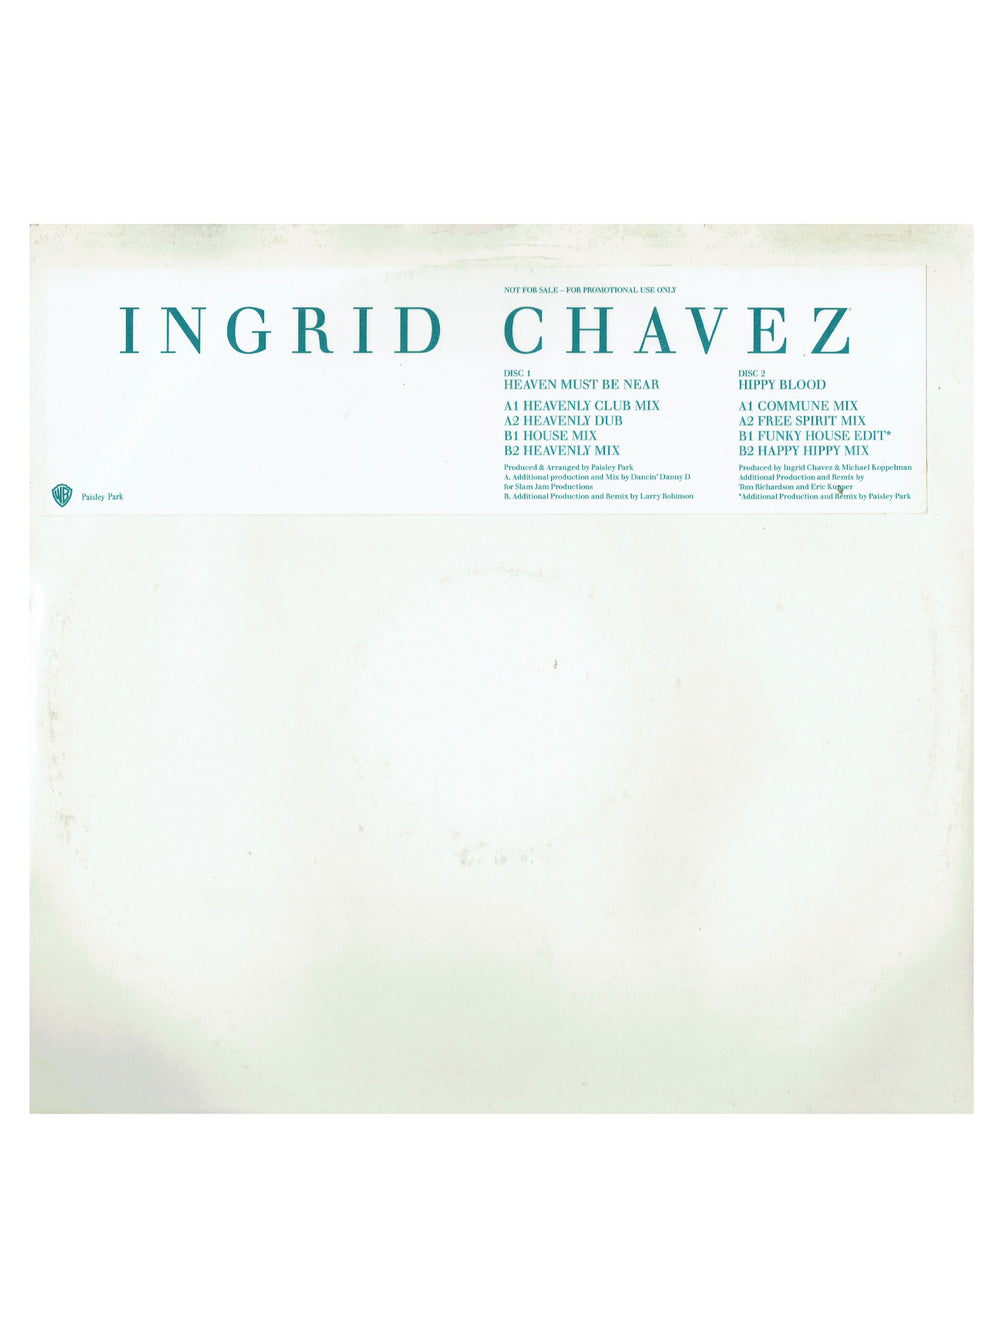 Ingrid Chavez Heaven Must Be Near Hippy Blood 2 X 12 Vinyl Single White Label Prince AS